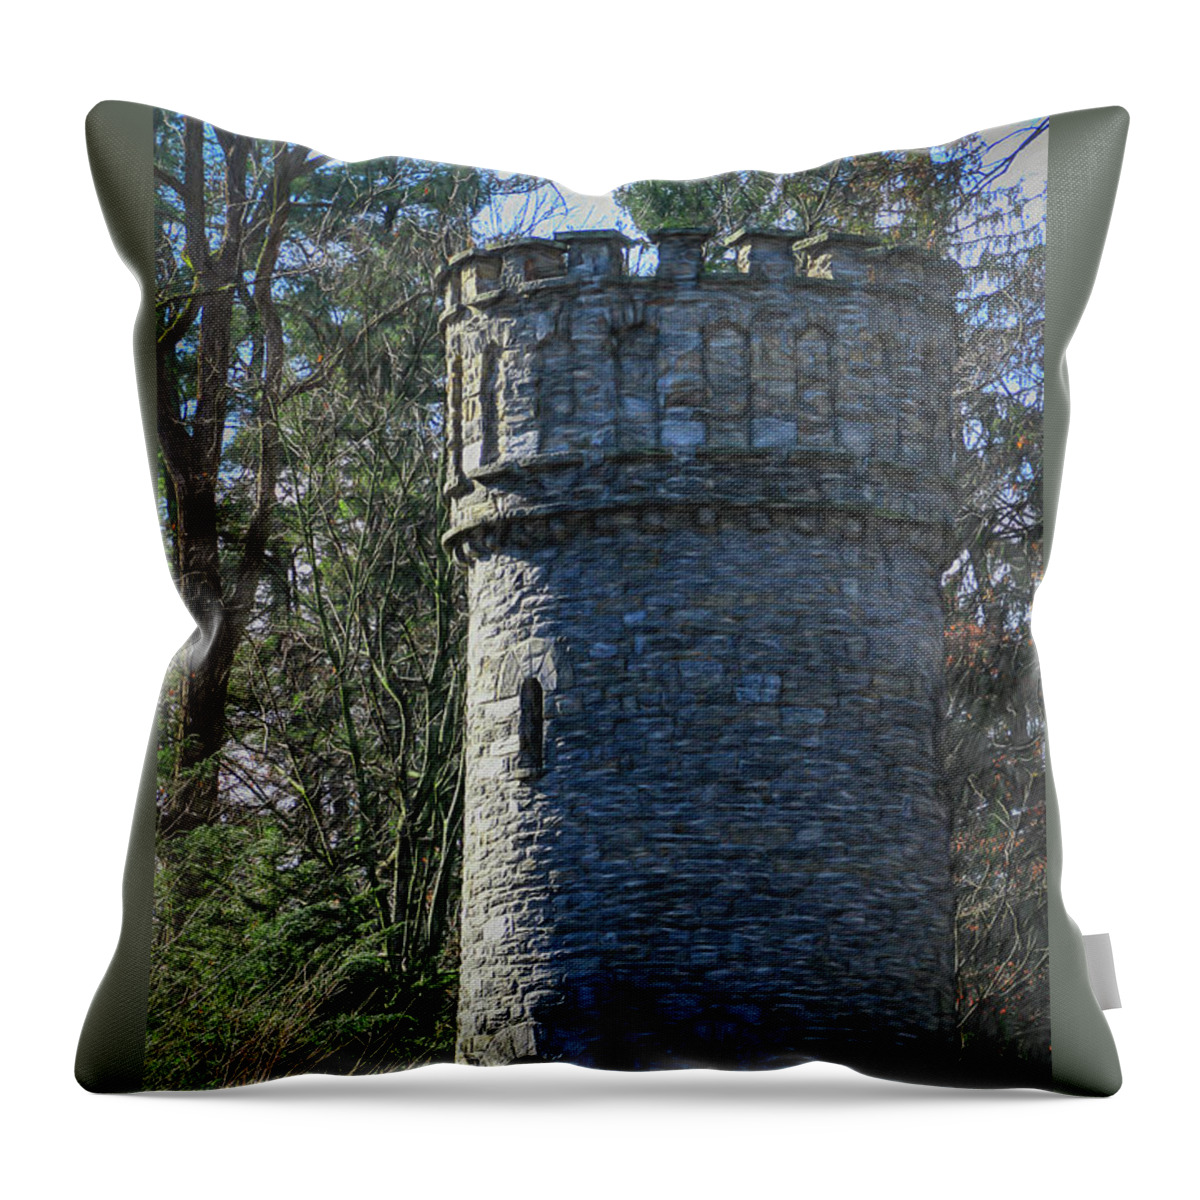 Stonework Throw Pillow featuring the digital art Magical Tower by Patrice Zinck